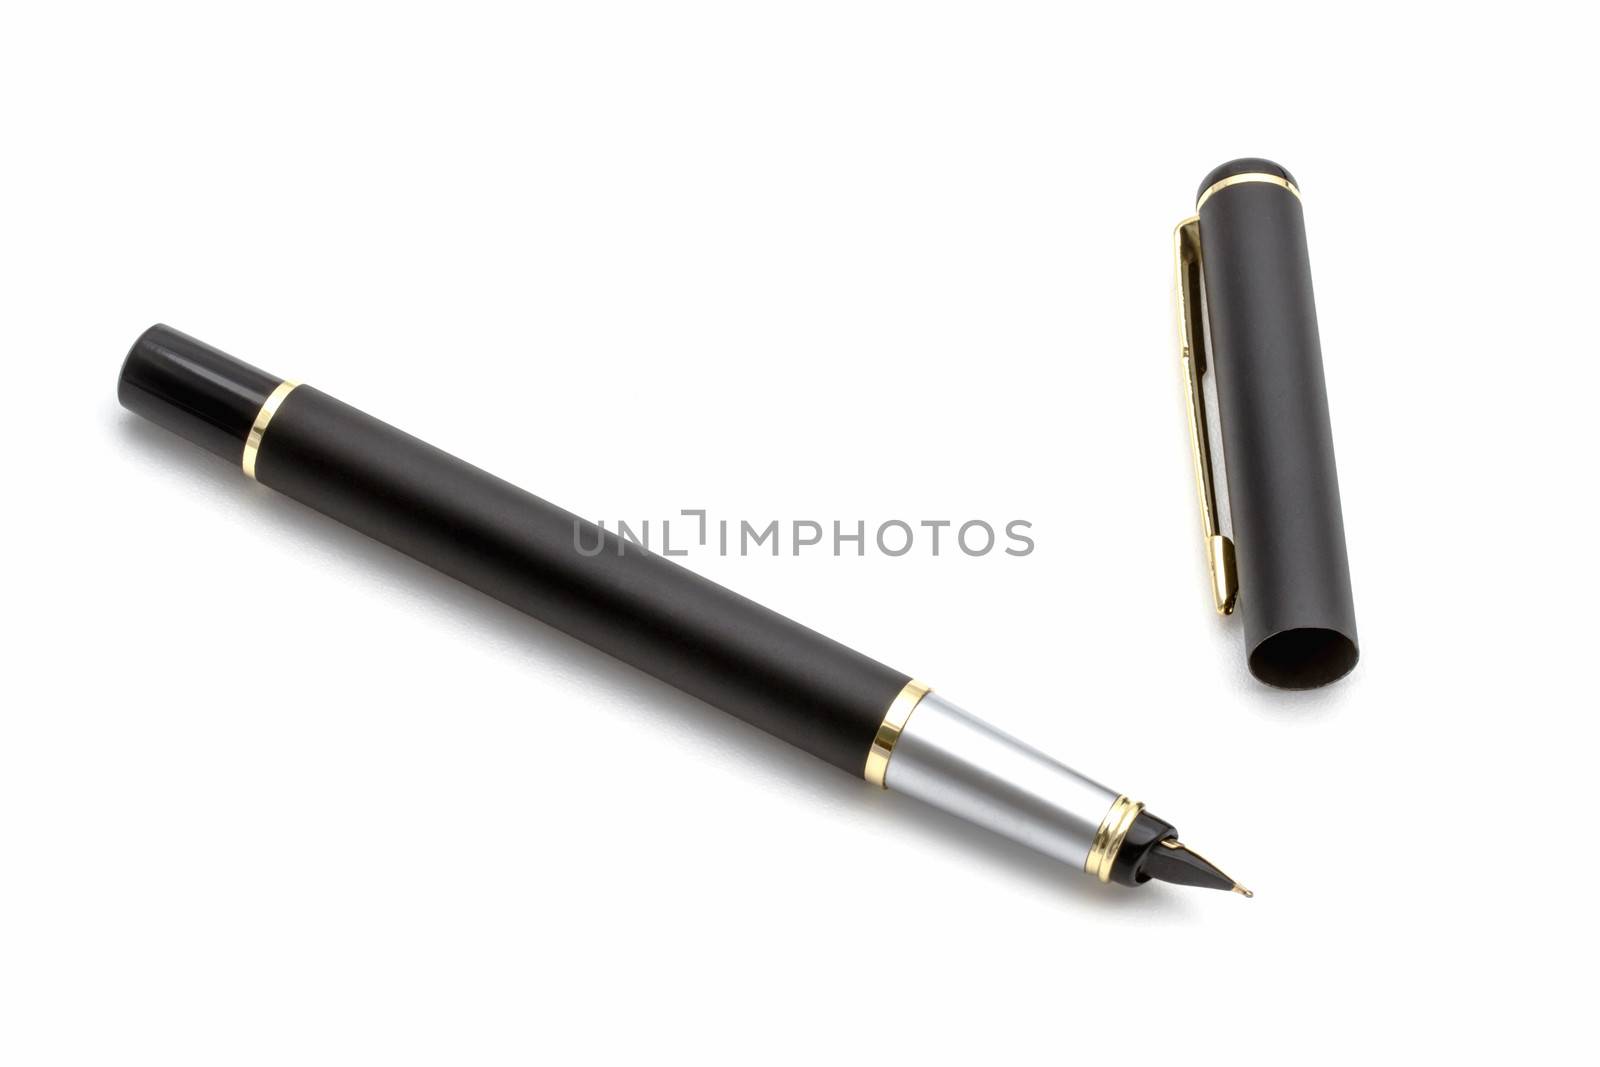 Black pen isolated on white background